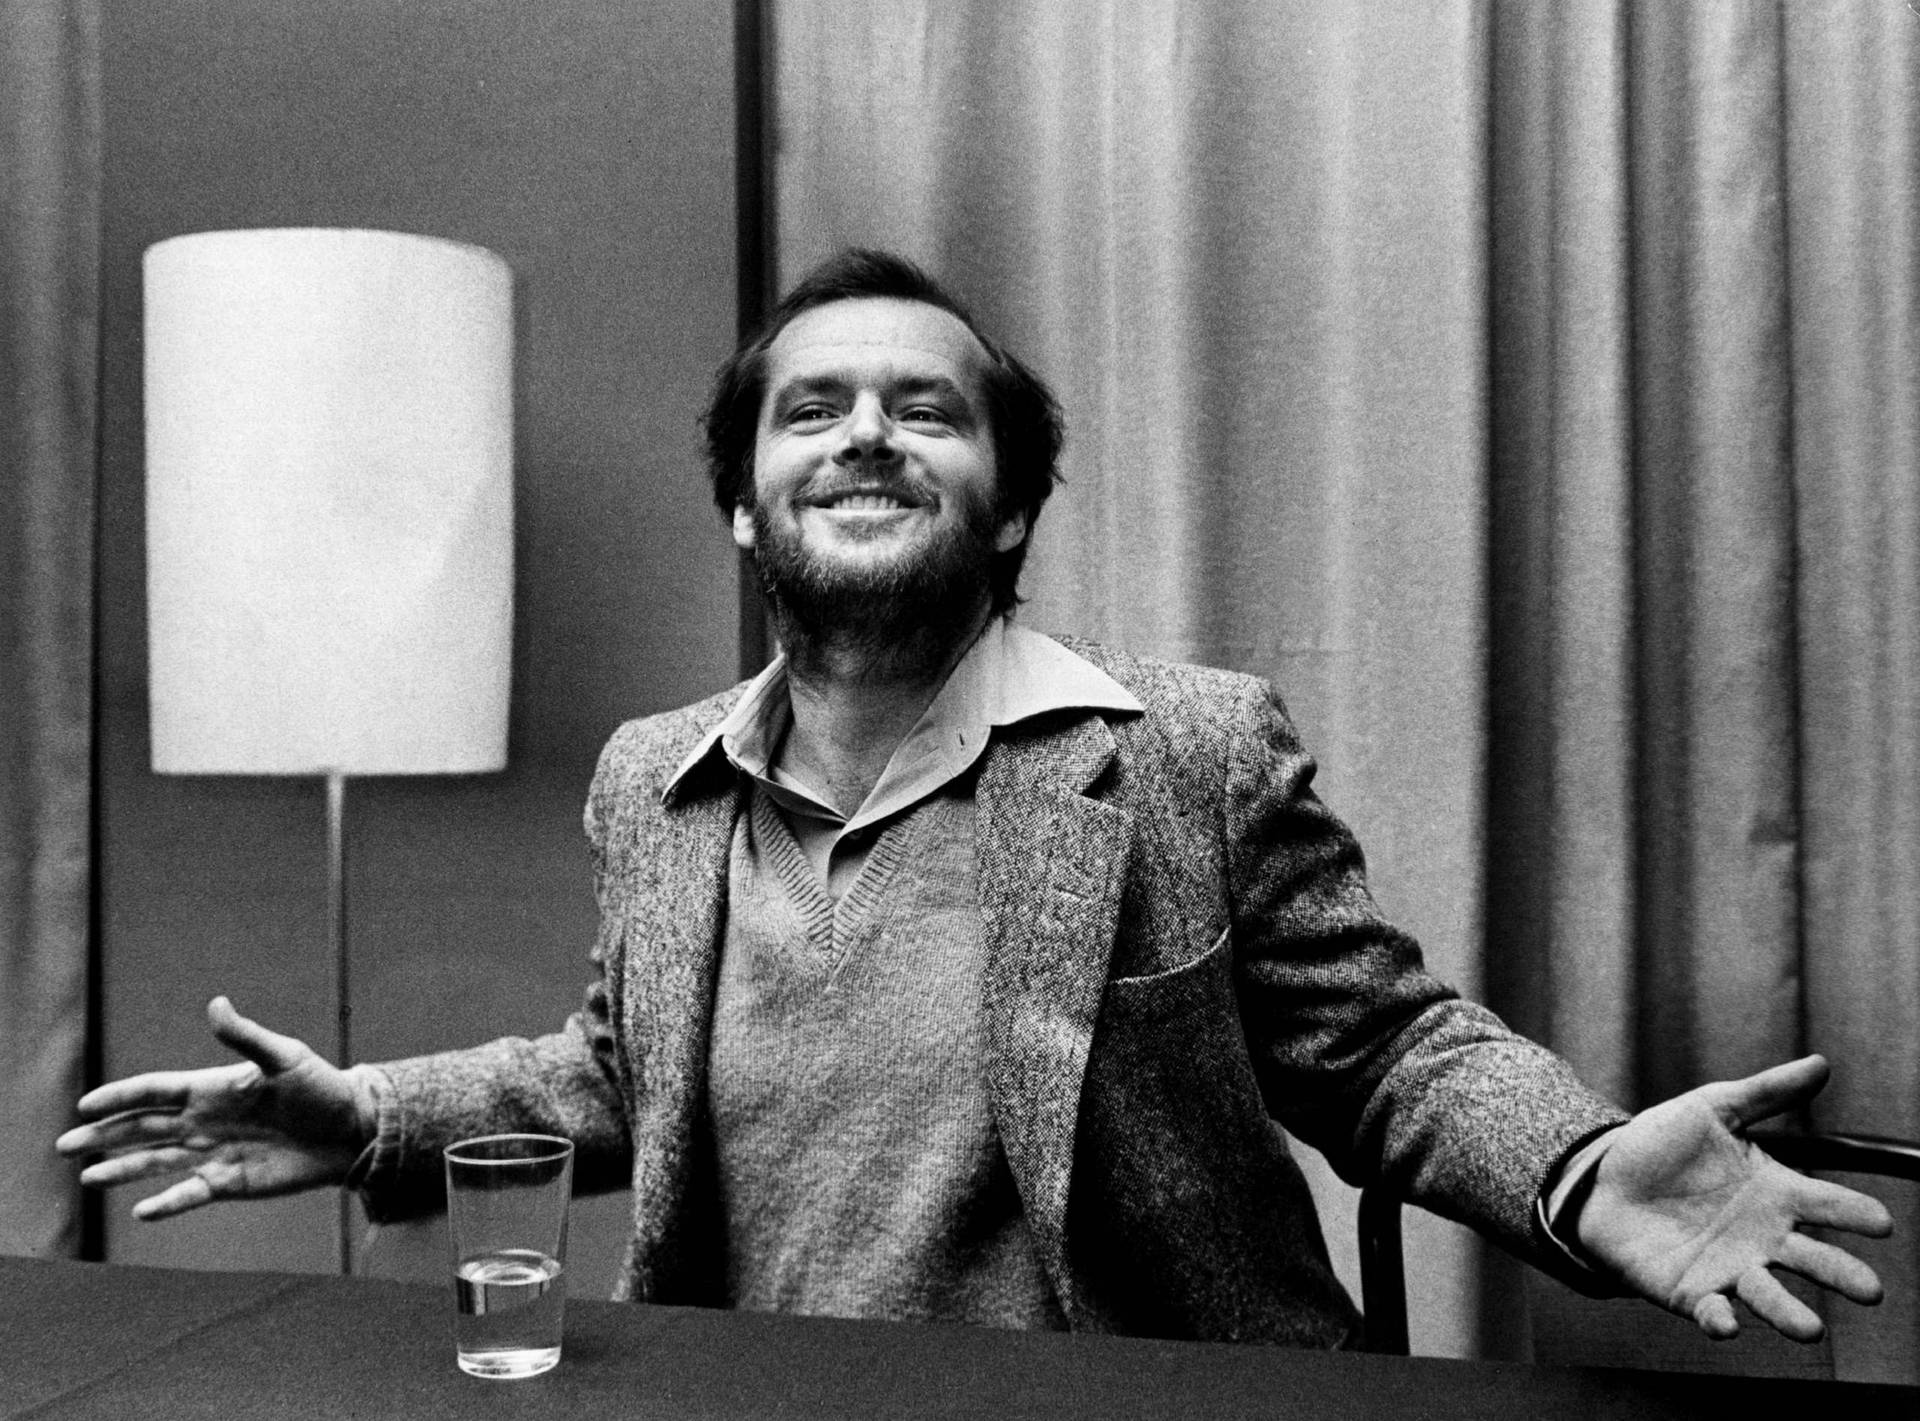 Jack Nicholson 70's Vintage Photo